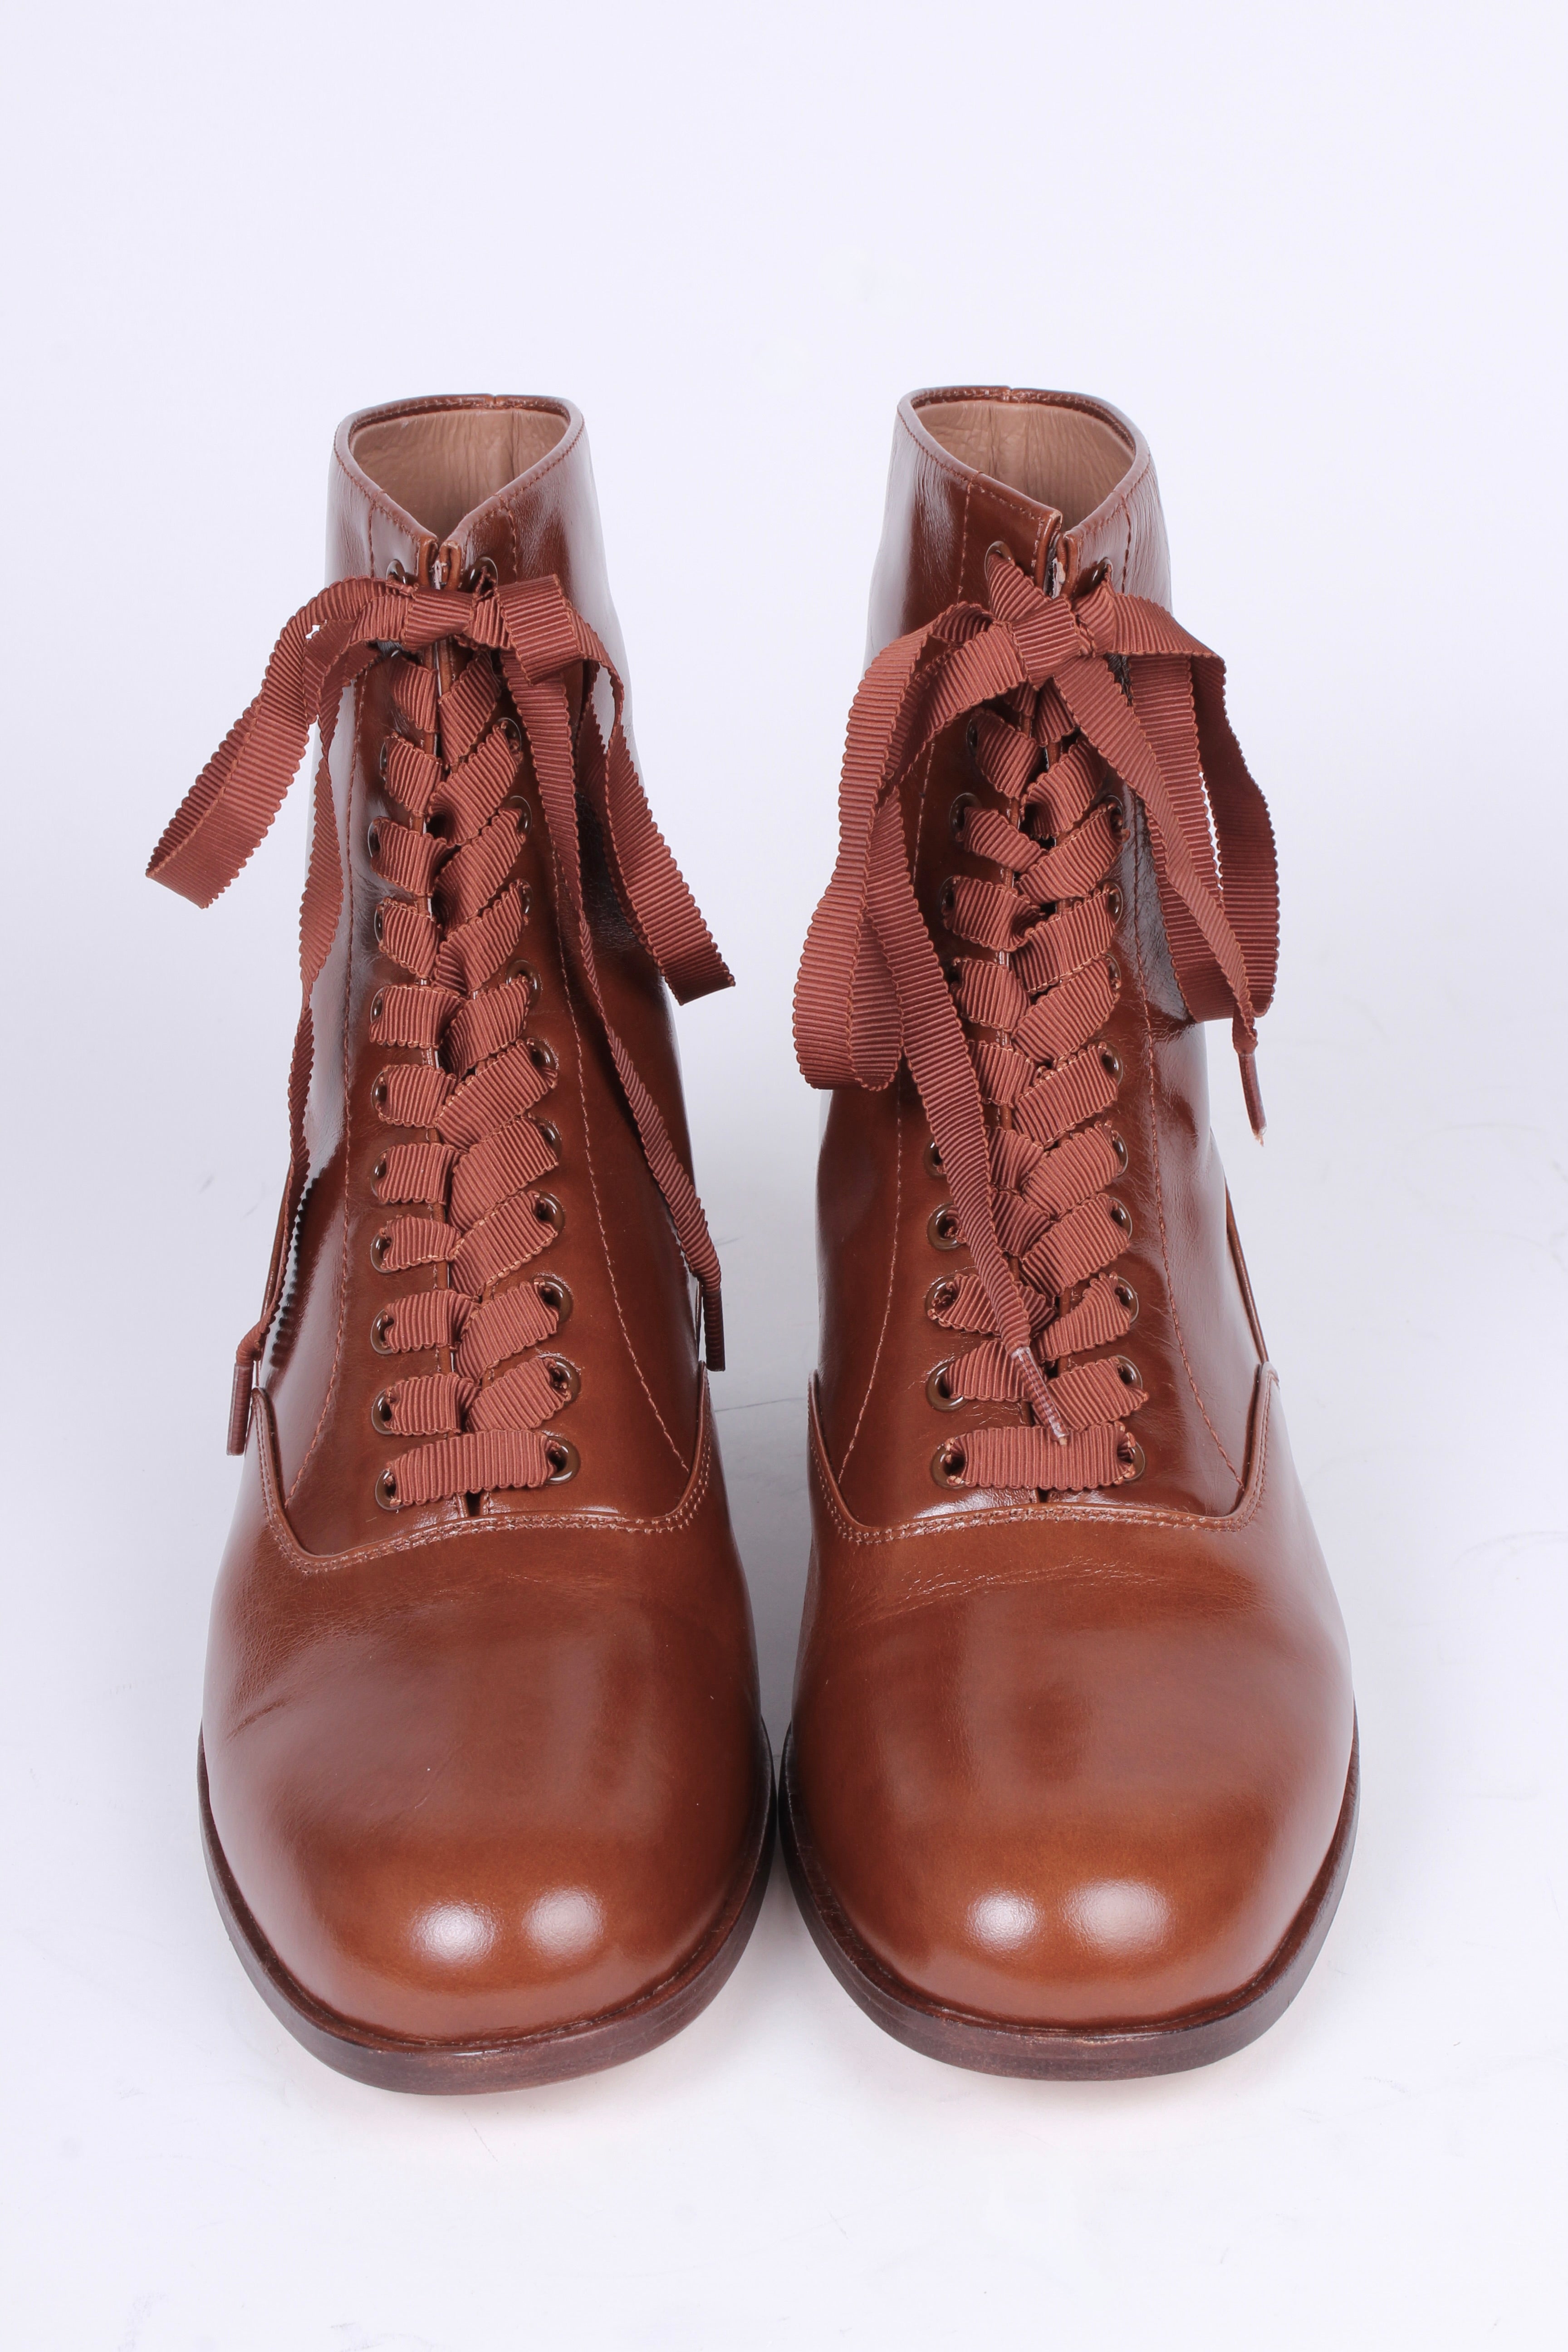 1920'er / 1930'er vintage style støvler - Brun - Britta